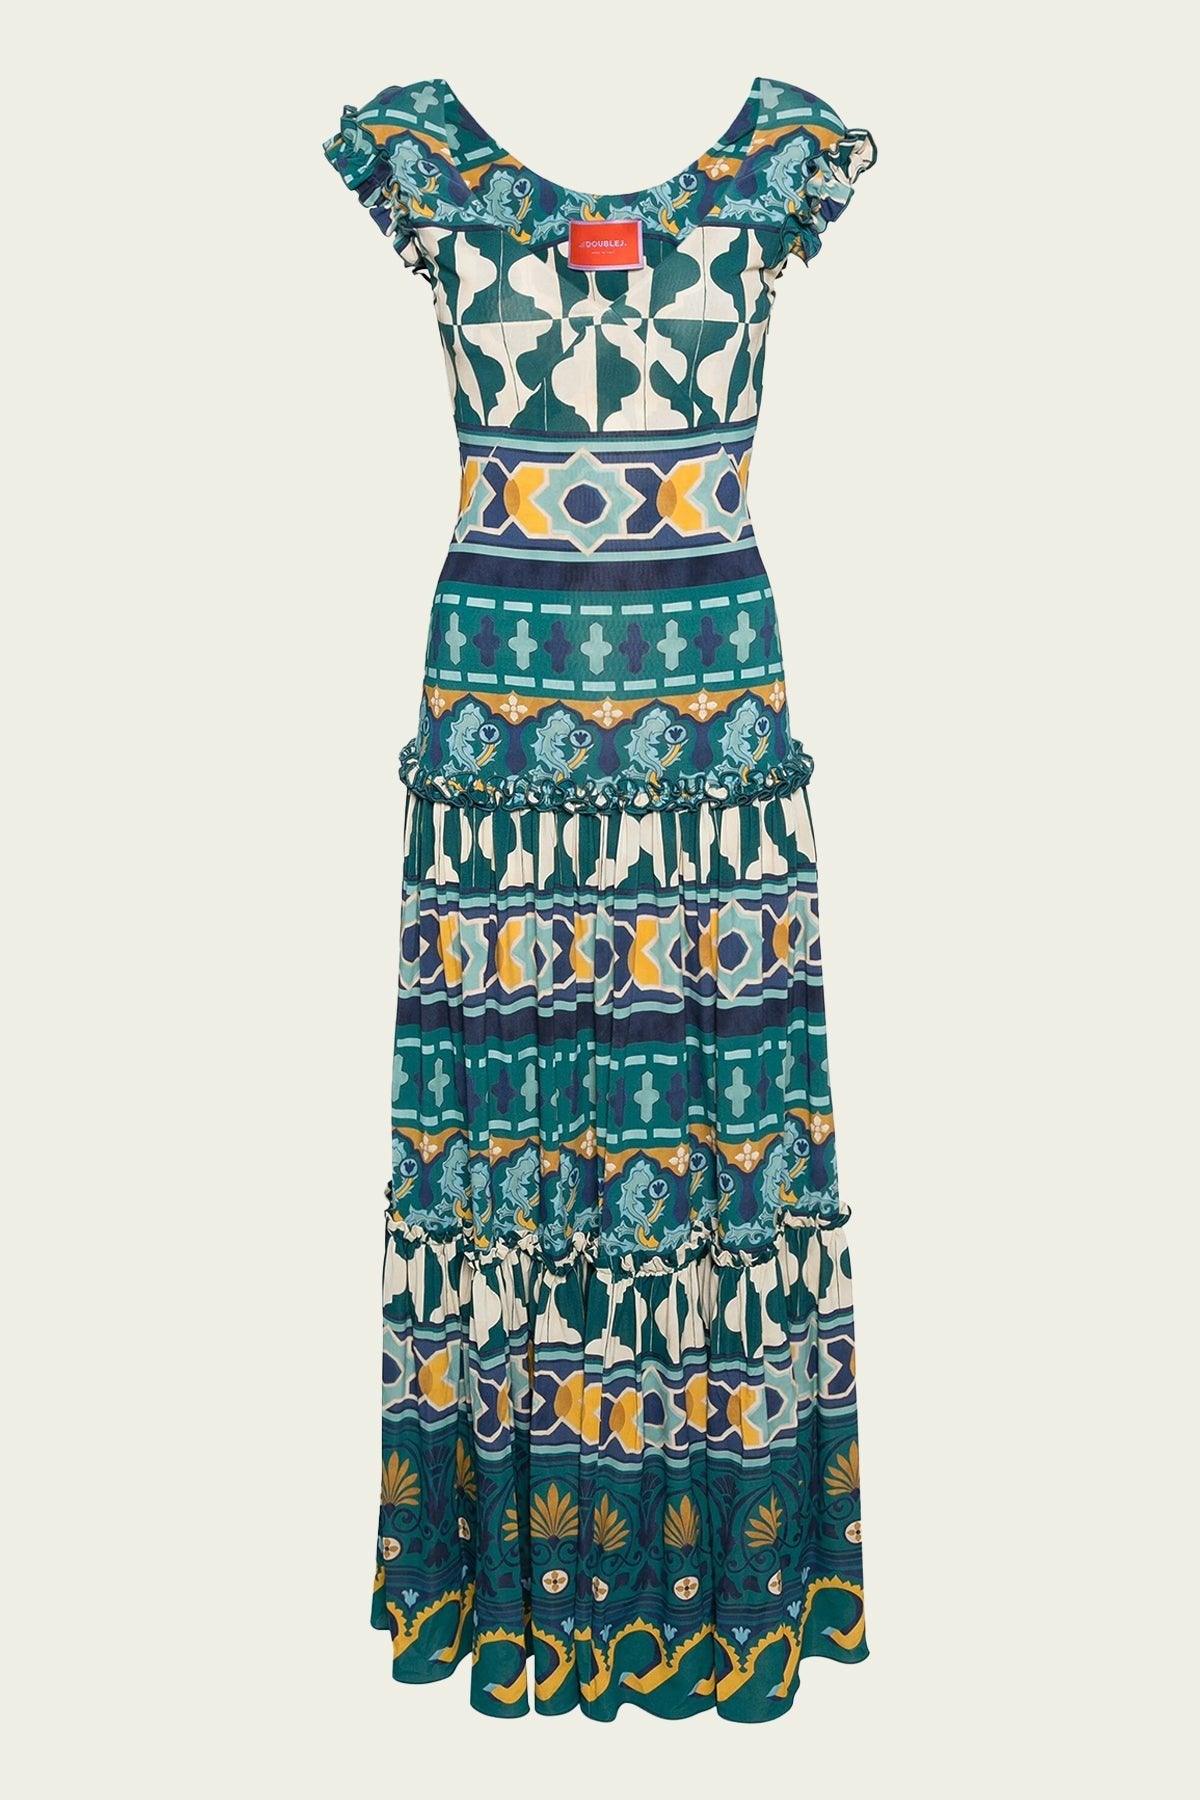 Pimento Dress in Casareale - shop-olivia.com